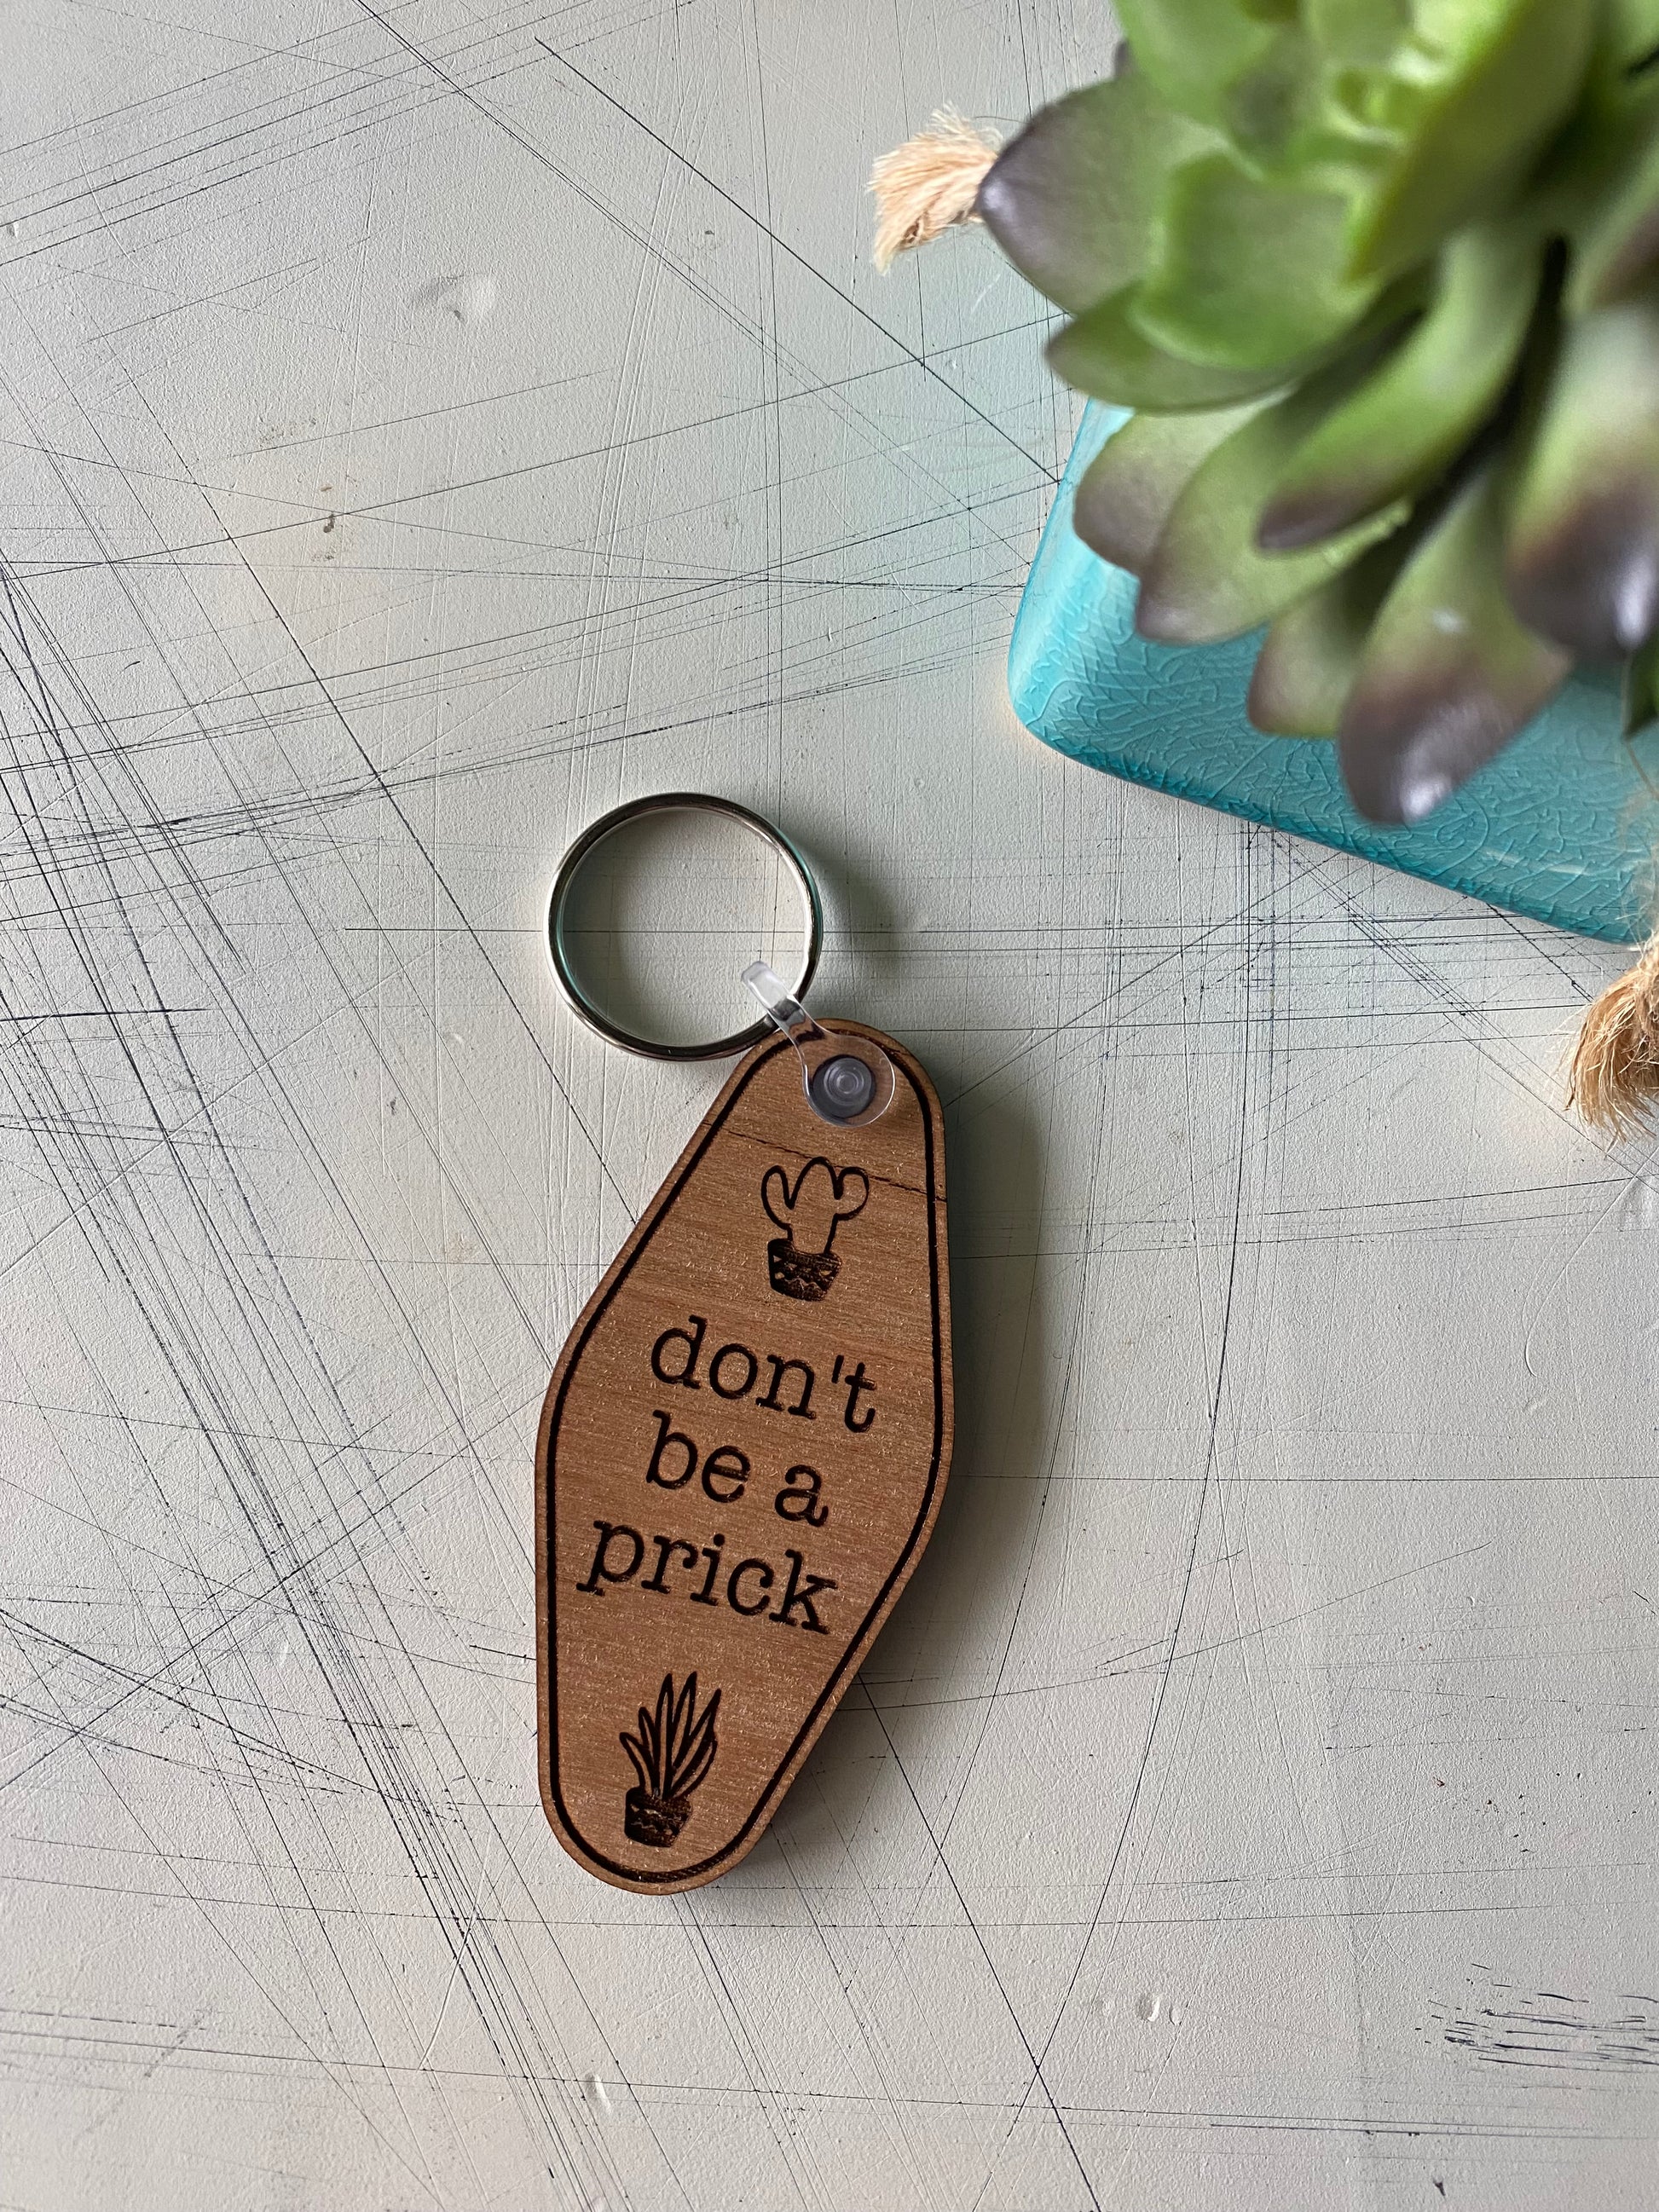 Don't be a prick - wood keychain - Novotny Designs - motel style keychain